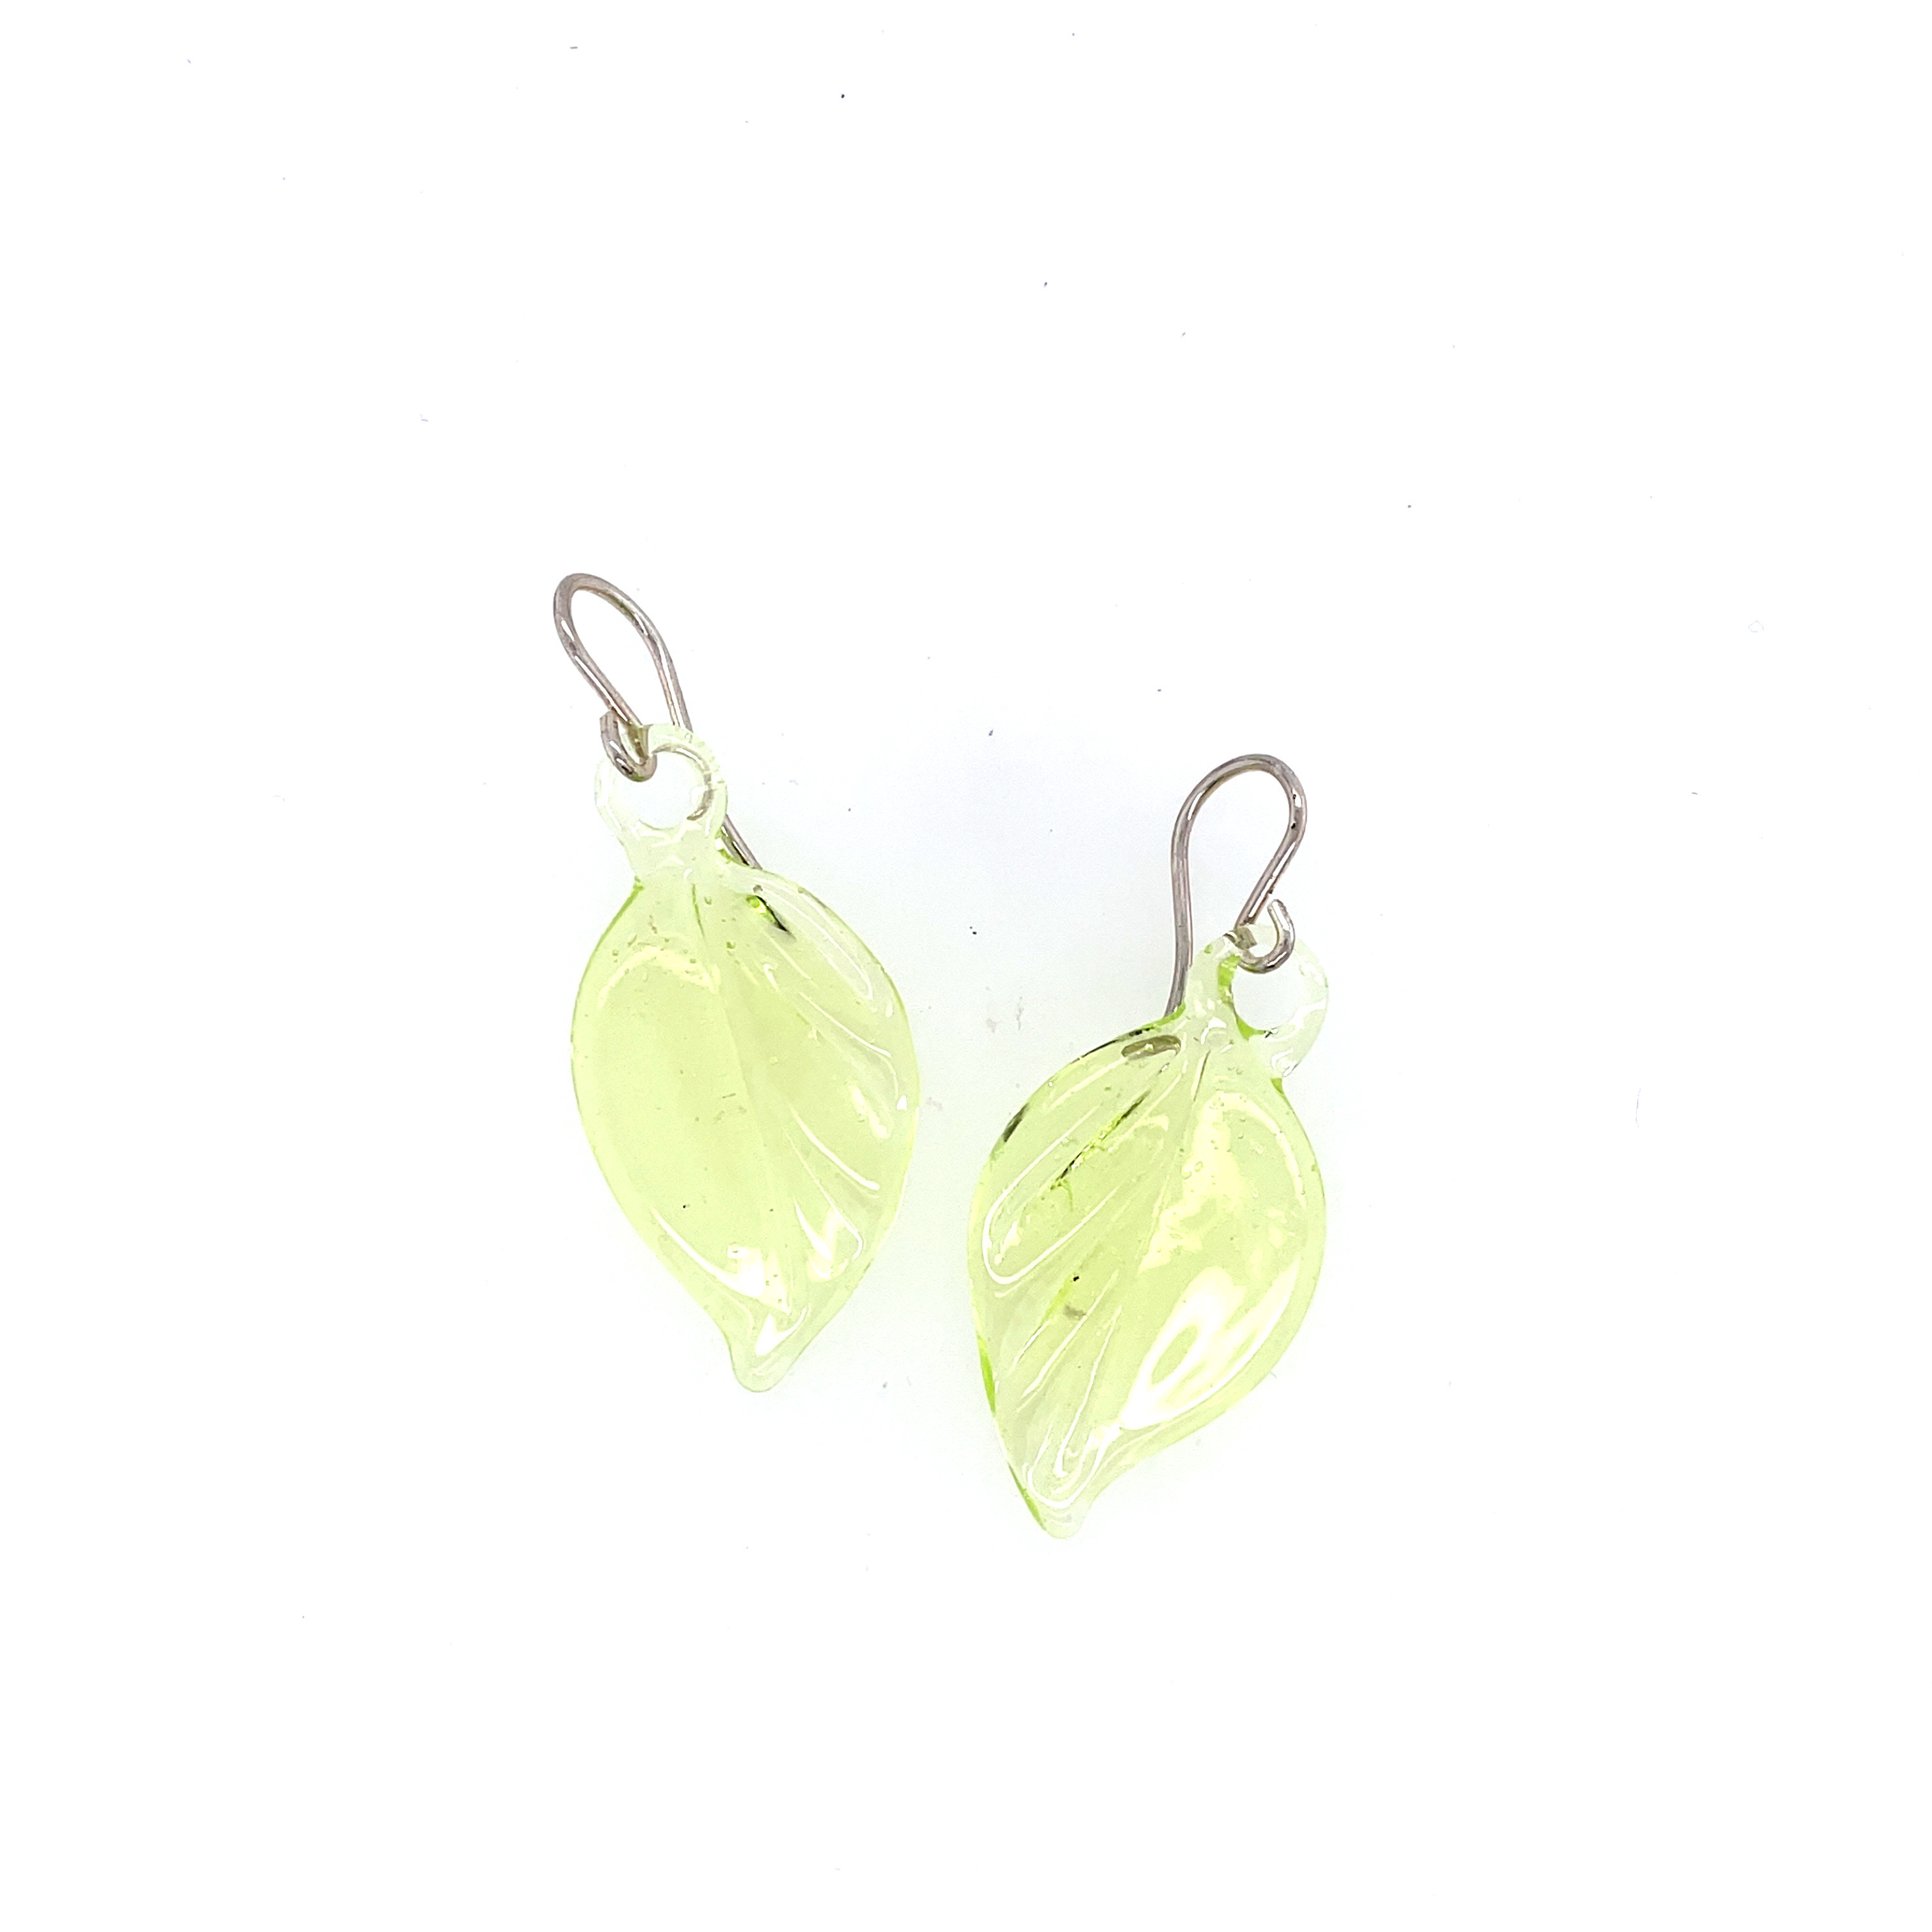 Lime Green Aspen Leaf Earrings on Sterling Silver Wires